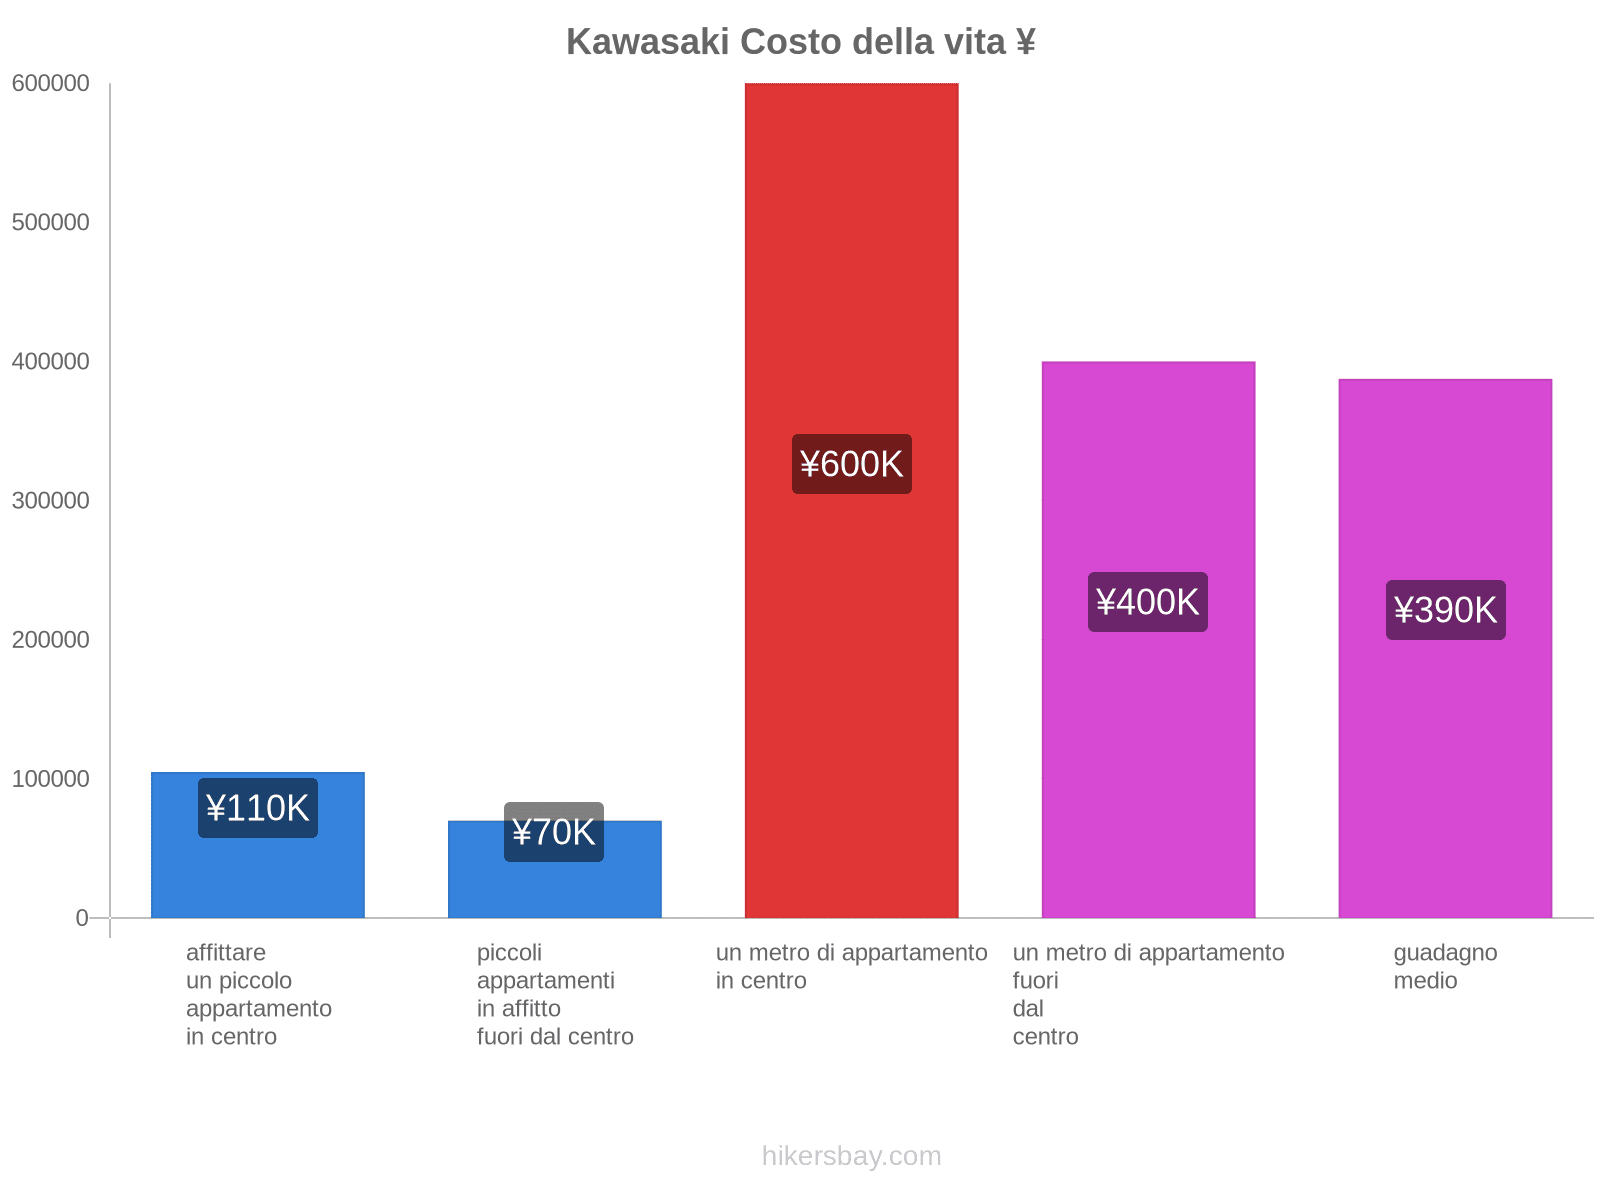 Kawasaki costo della vita hikersbay.com